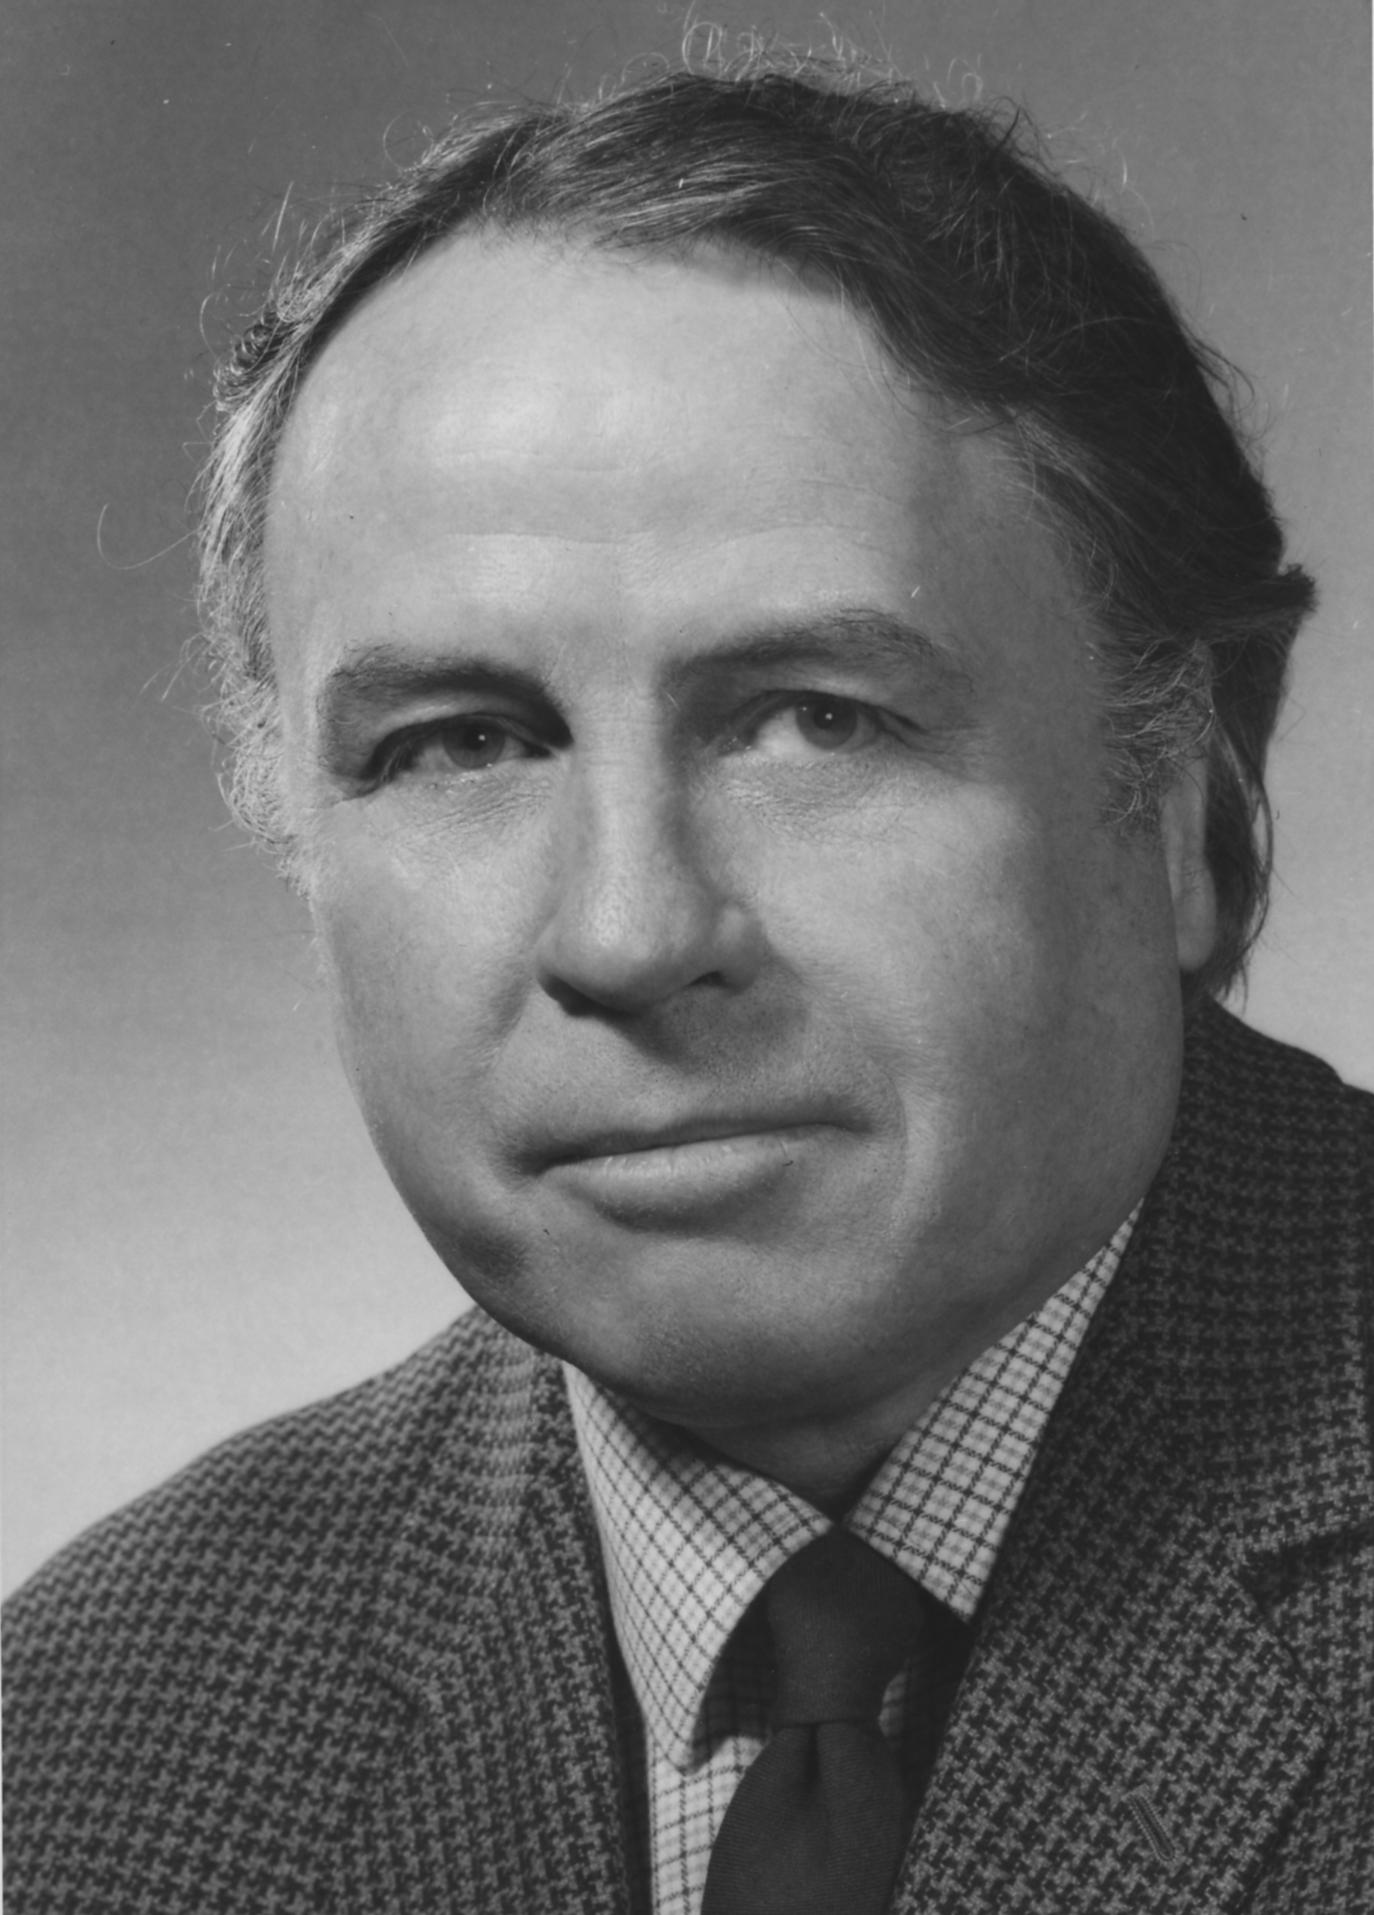 John P. Wyatt